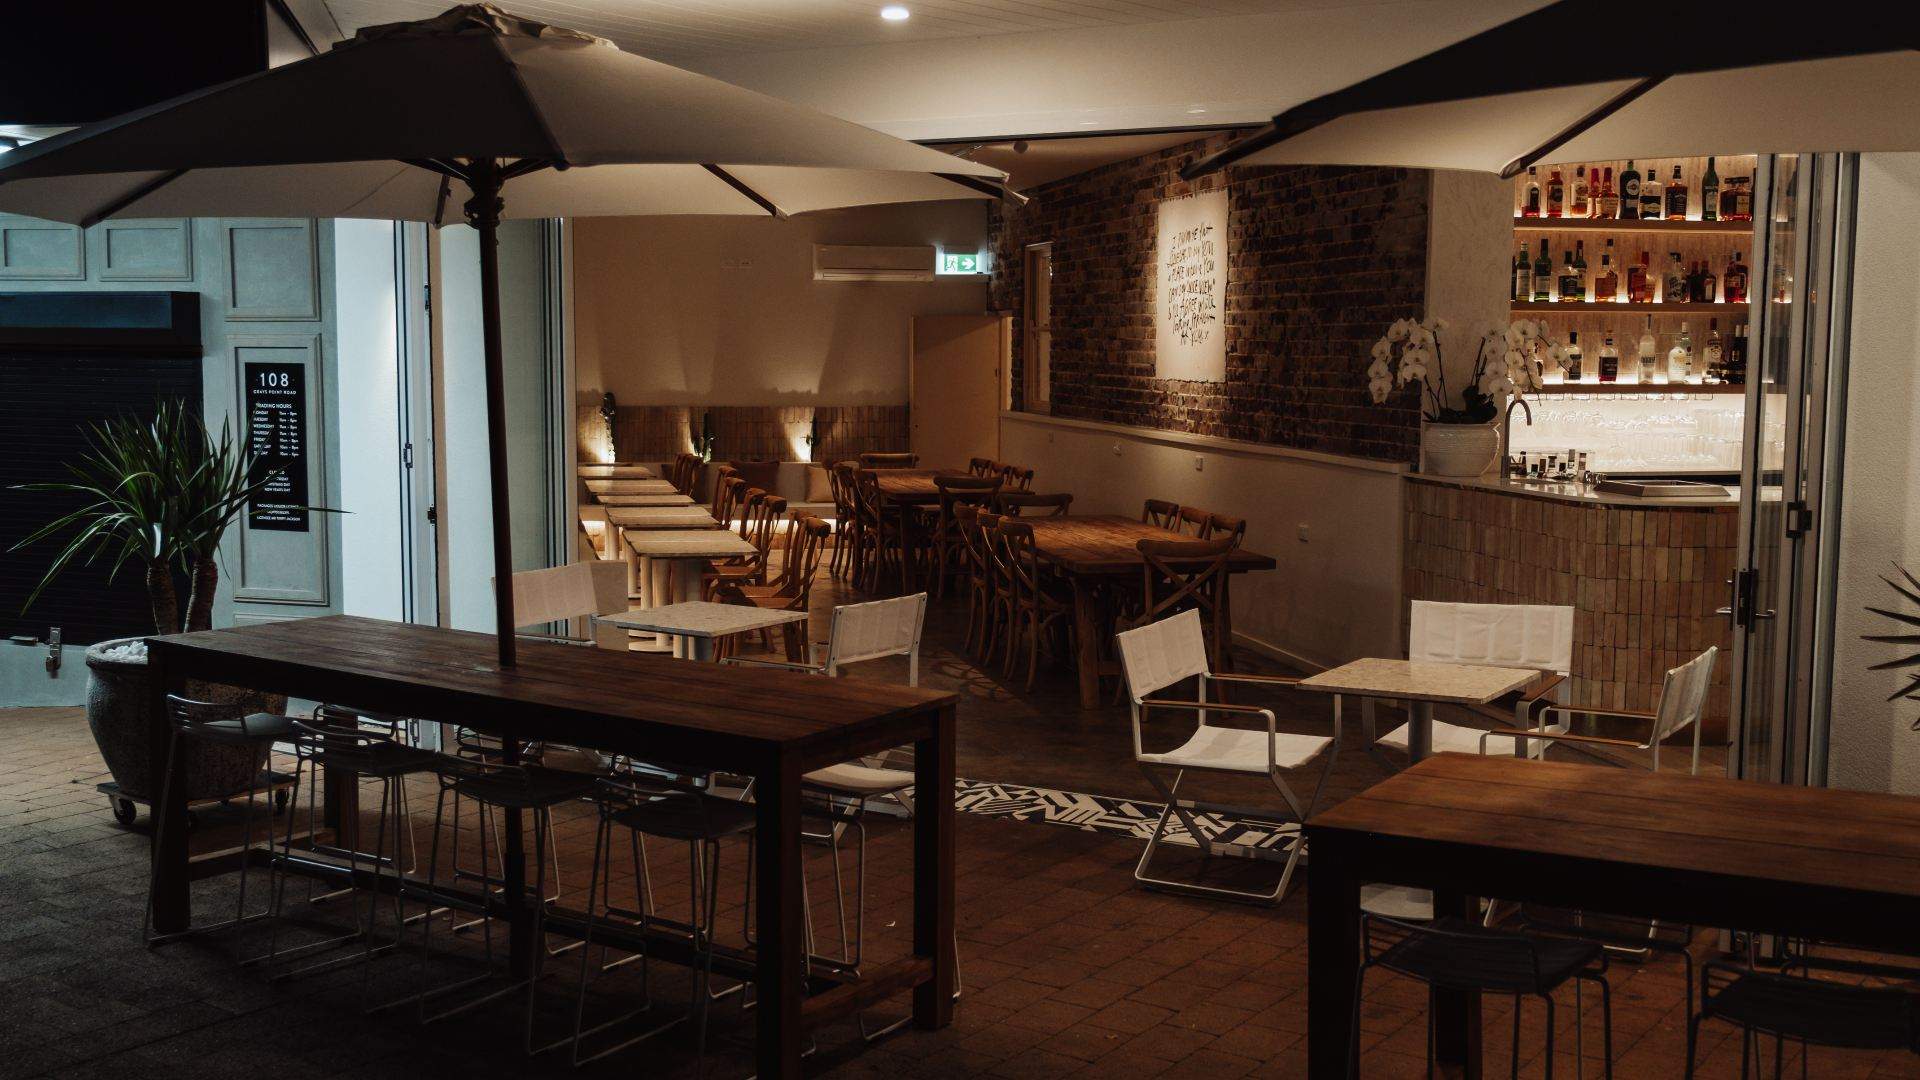 Sleek New South Sydney Cafe Jack Gray Is a Neighbourhood Cafe by Day, Wine Bar by Night